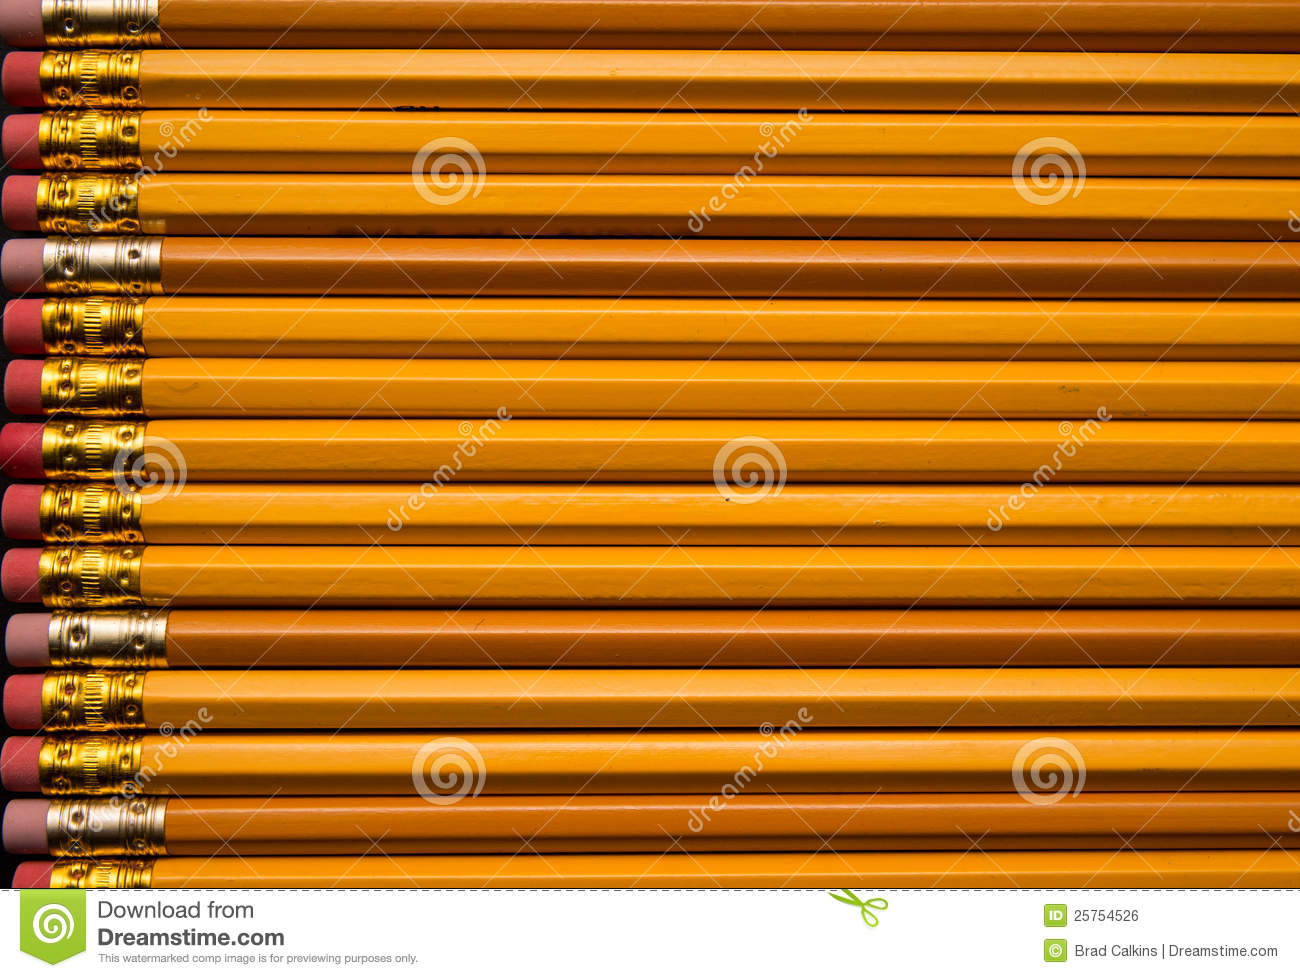 Pencil Background For Education Or School Concept Mr No Pr No 2 856 4